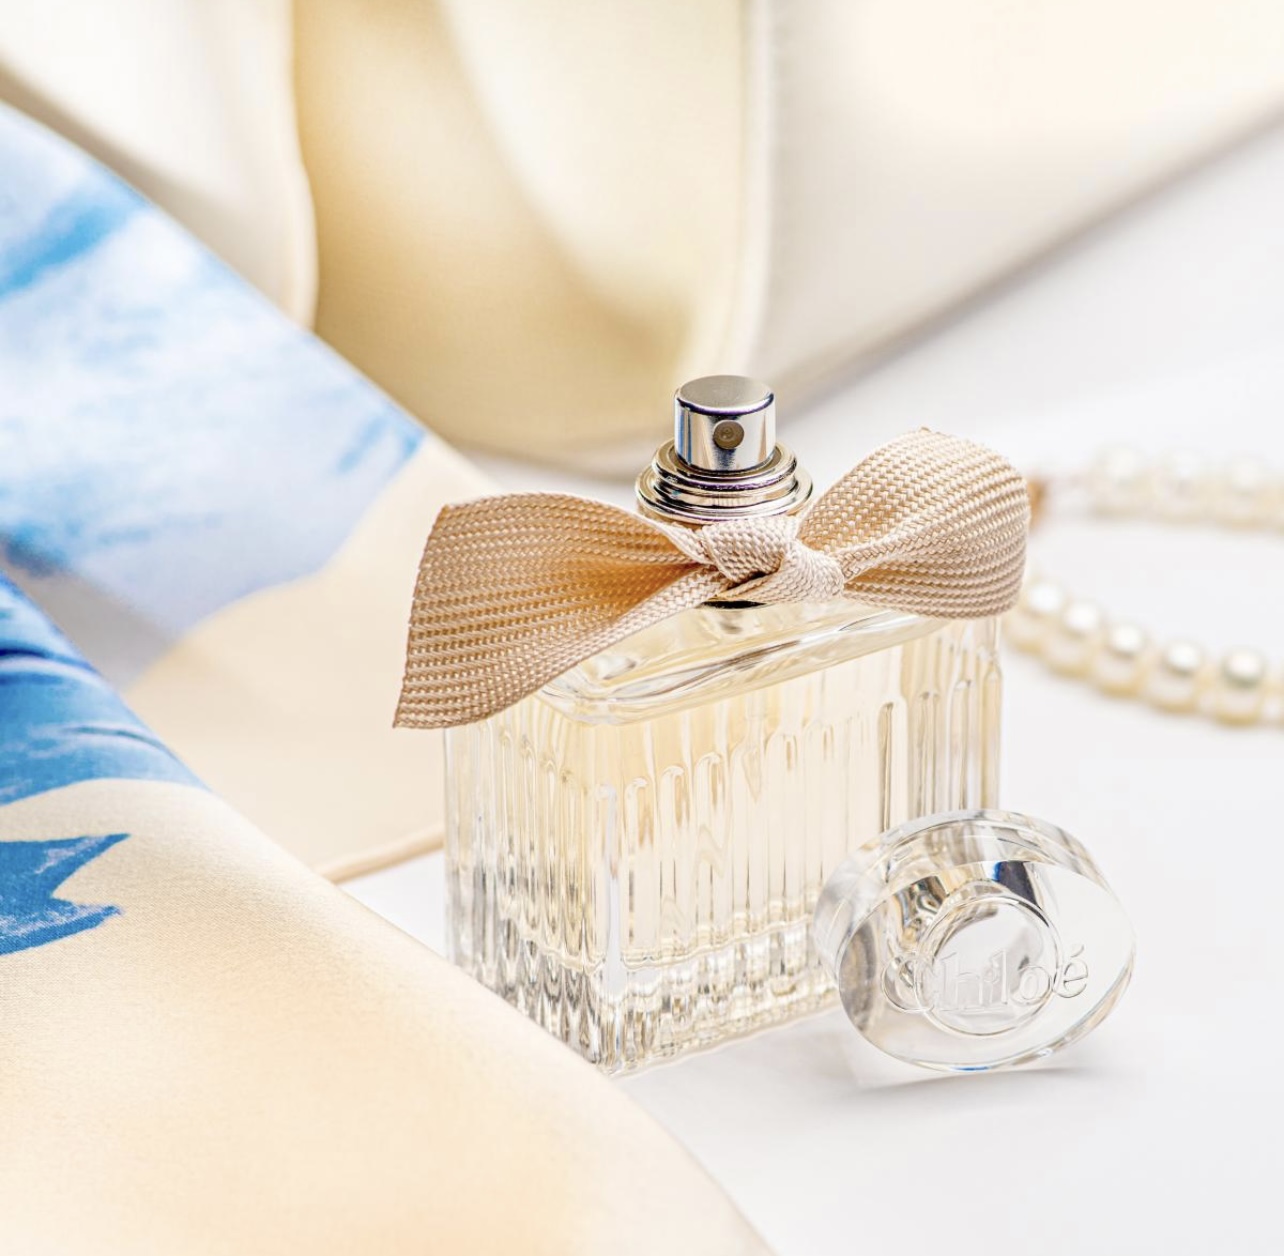 CHLOE Eau de Parfum Chloé: A Classic Perfume ~ Fragrance Reviews